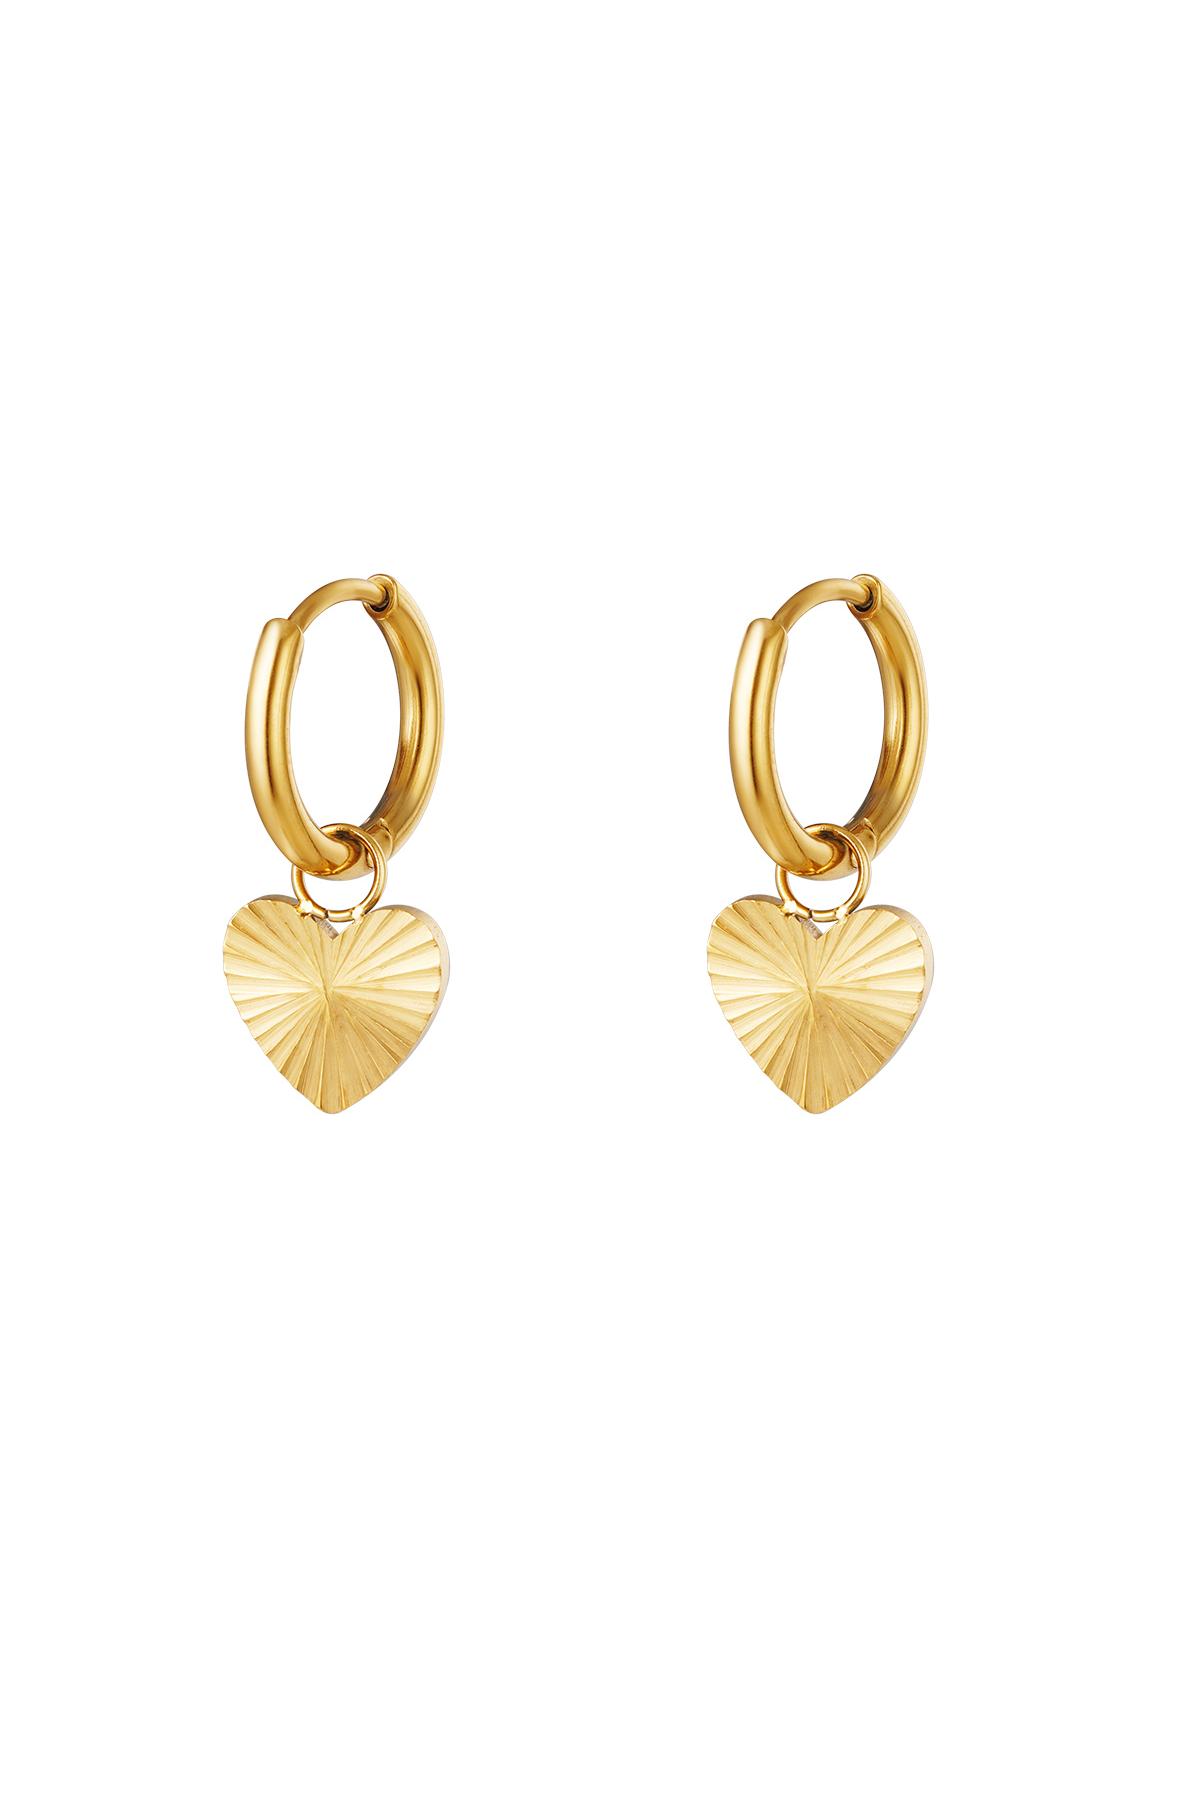 Stainles steel earrings heart Gold Stainless Steel